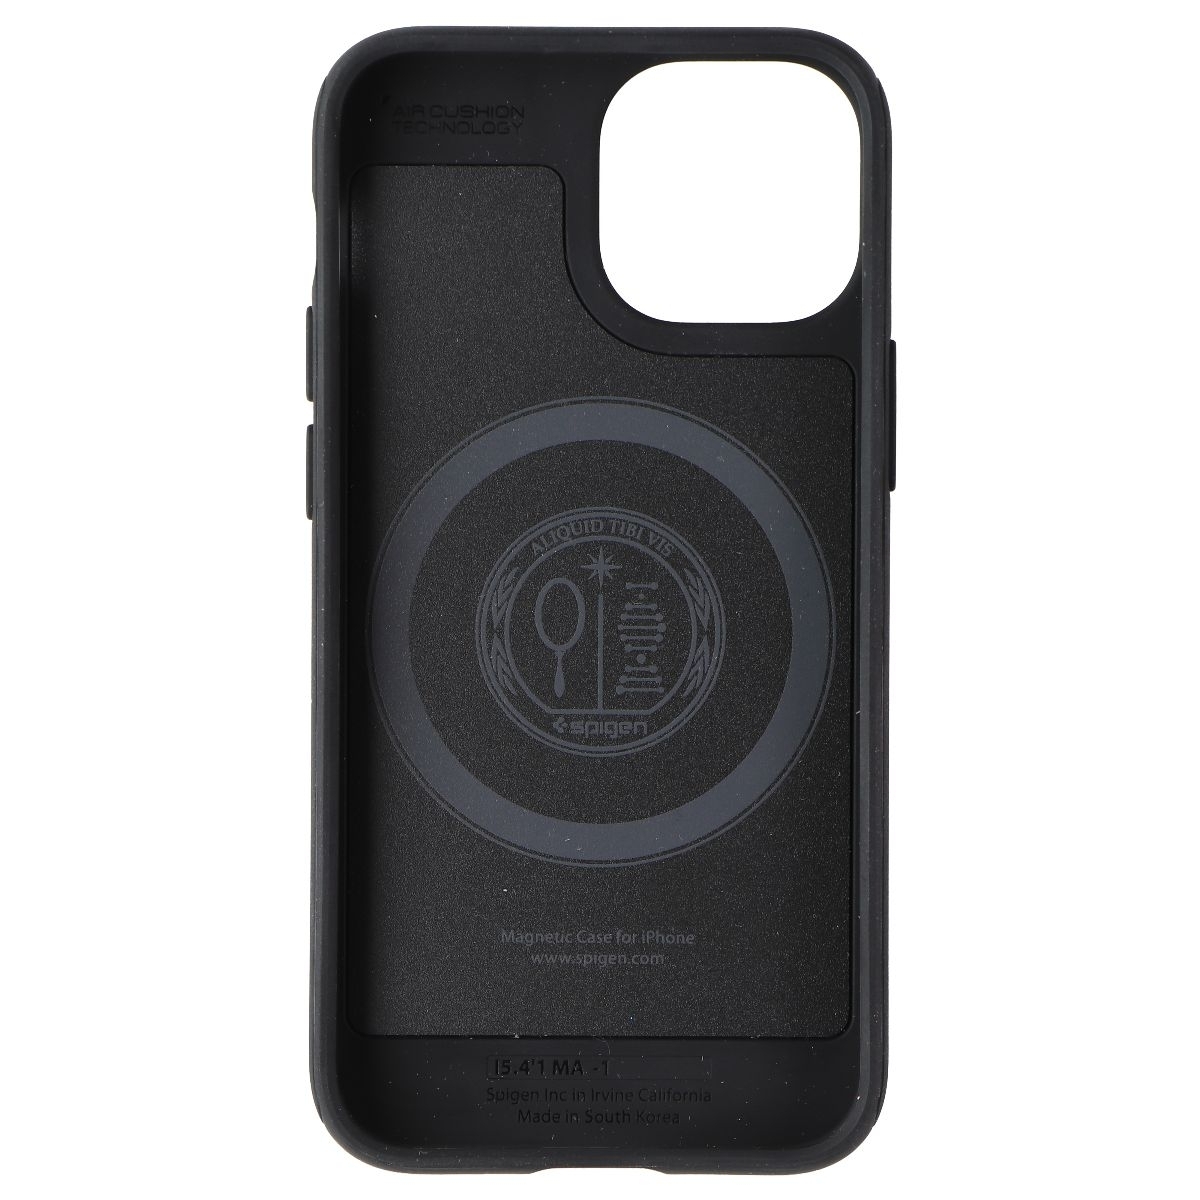 Spigen Core Armor Mag Series Case For Apple IPhone 12 Mini - Black (Refurbished)